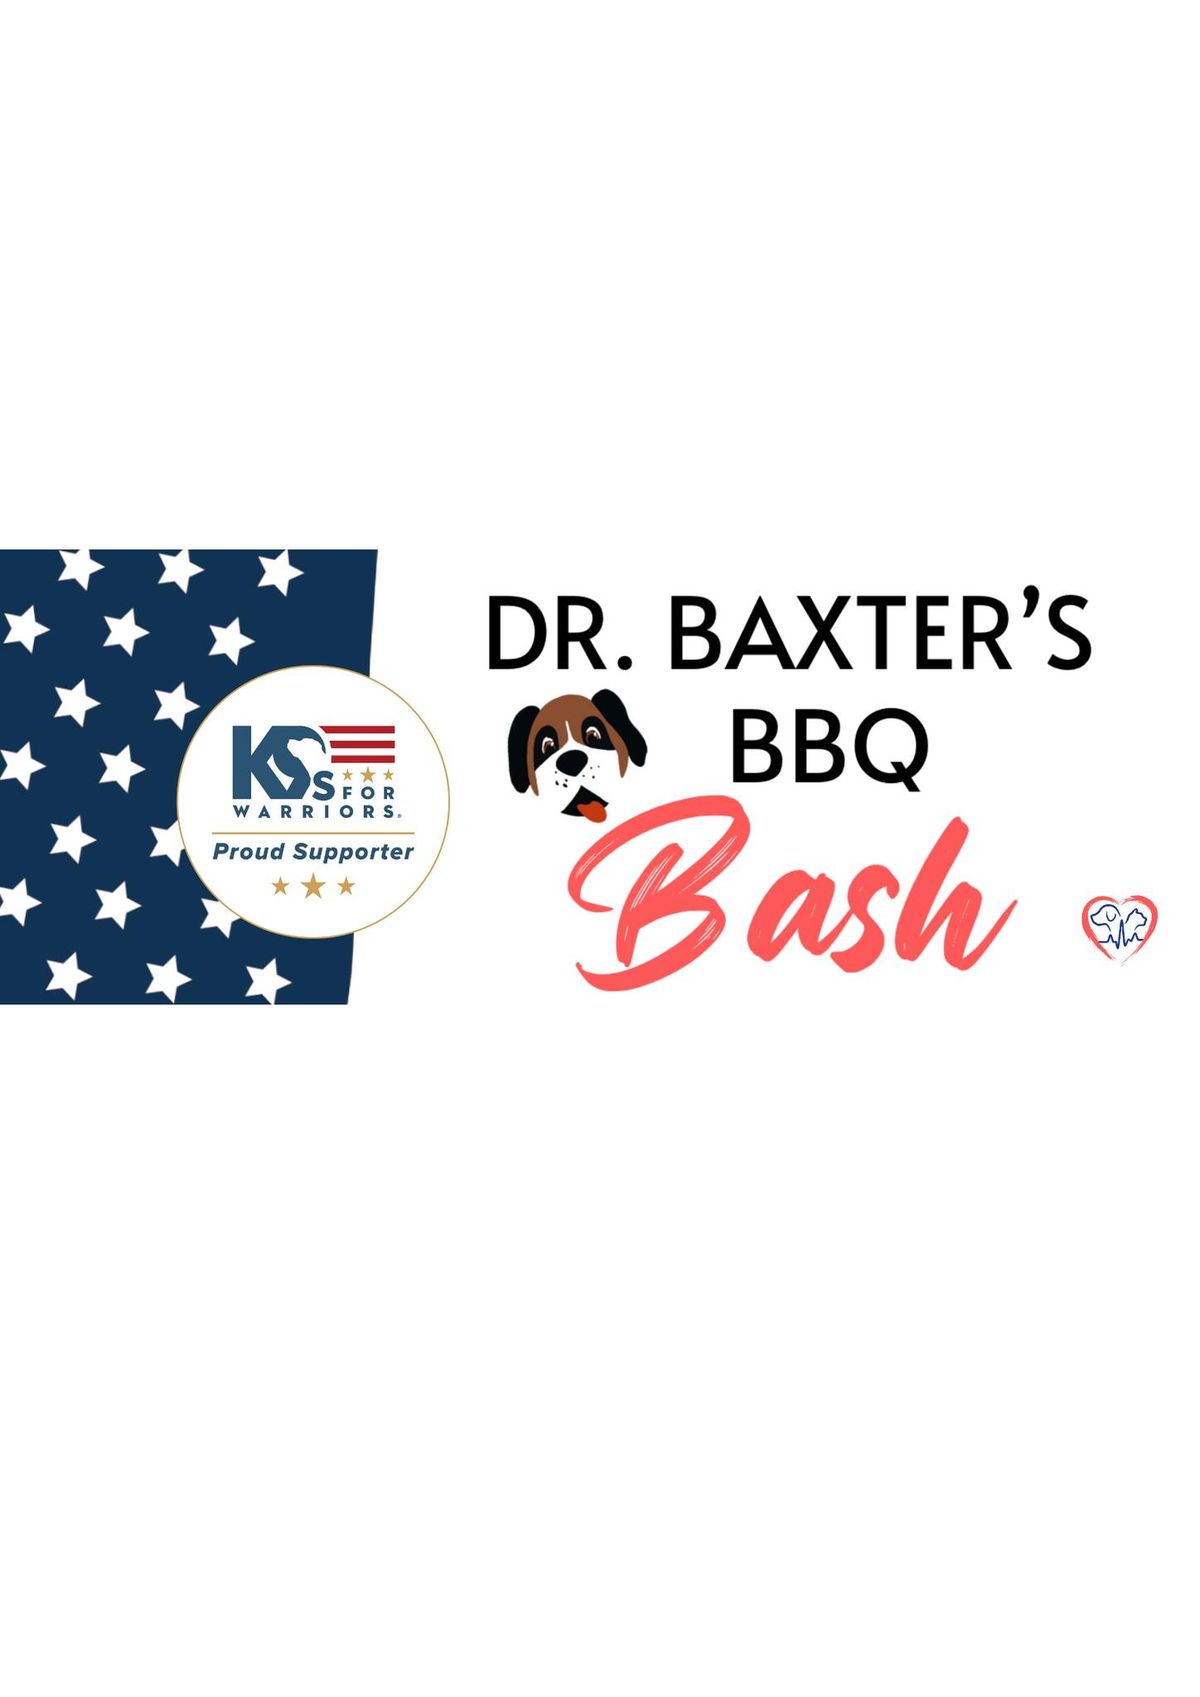 Dr. Baxter's BBQ Bash 